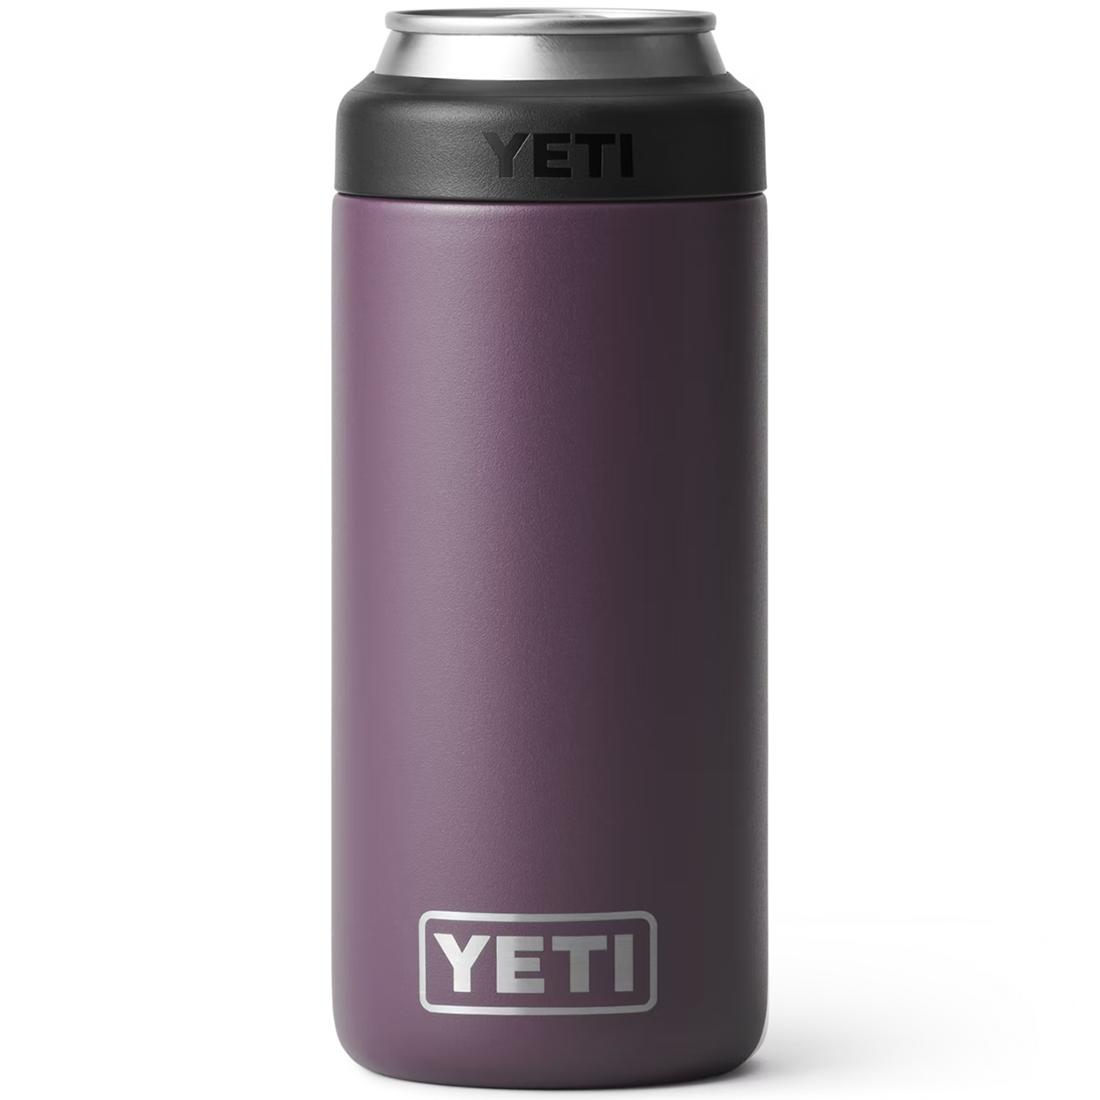 YETI - Rambler 12 oz Colster Can Cooler - Nordic Purple